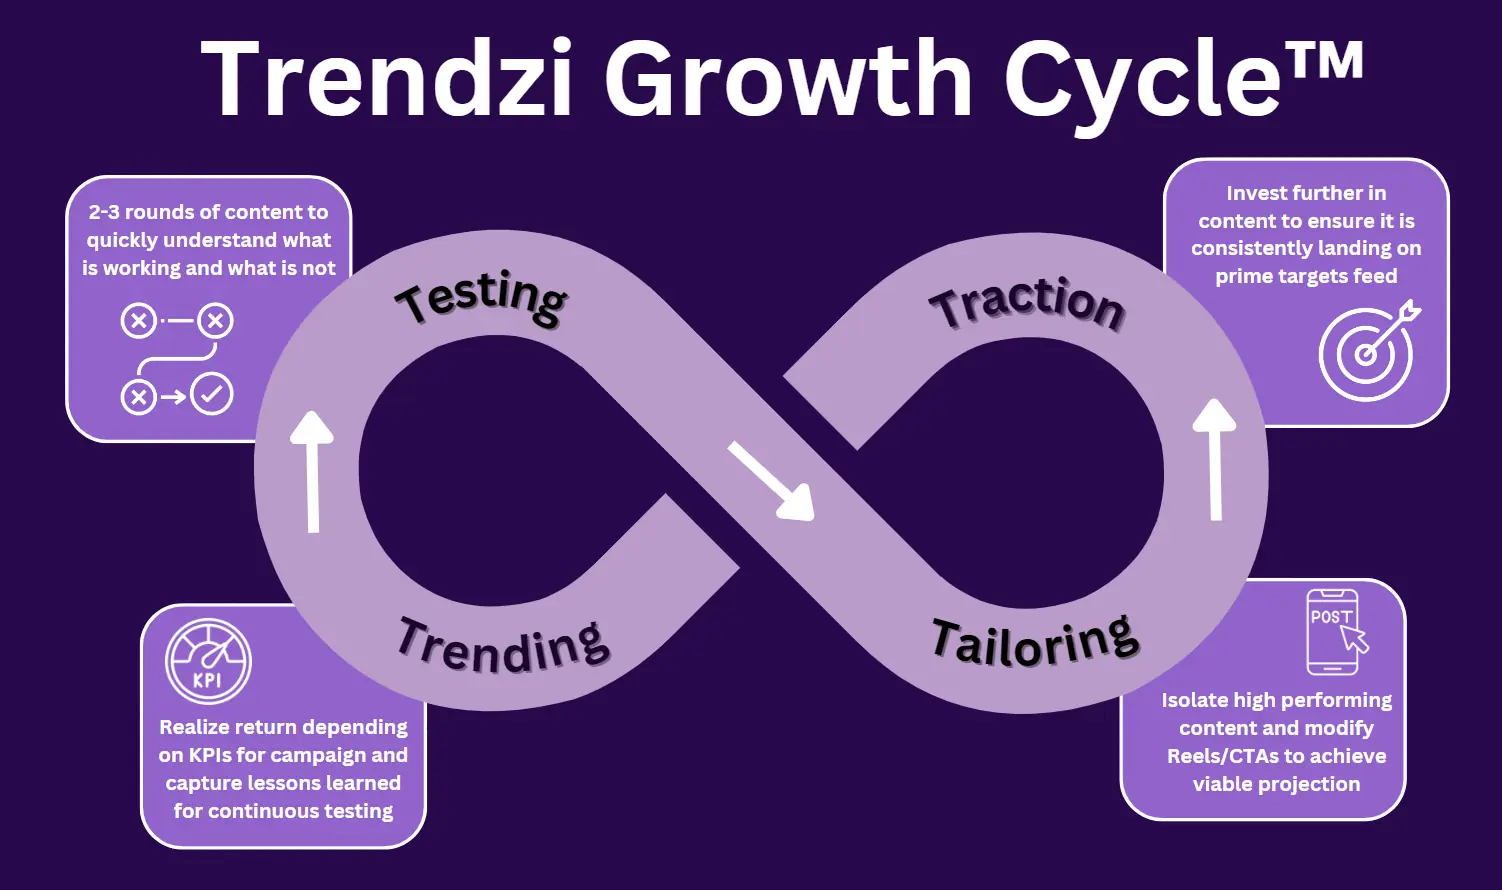 trendzi growth cycle